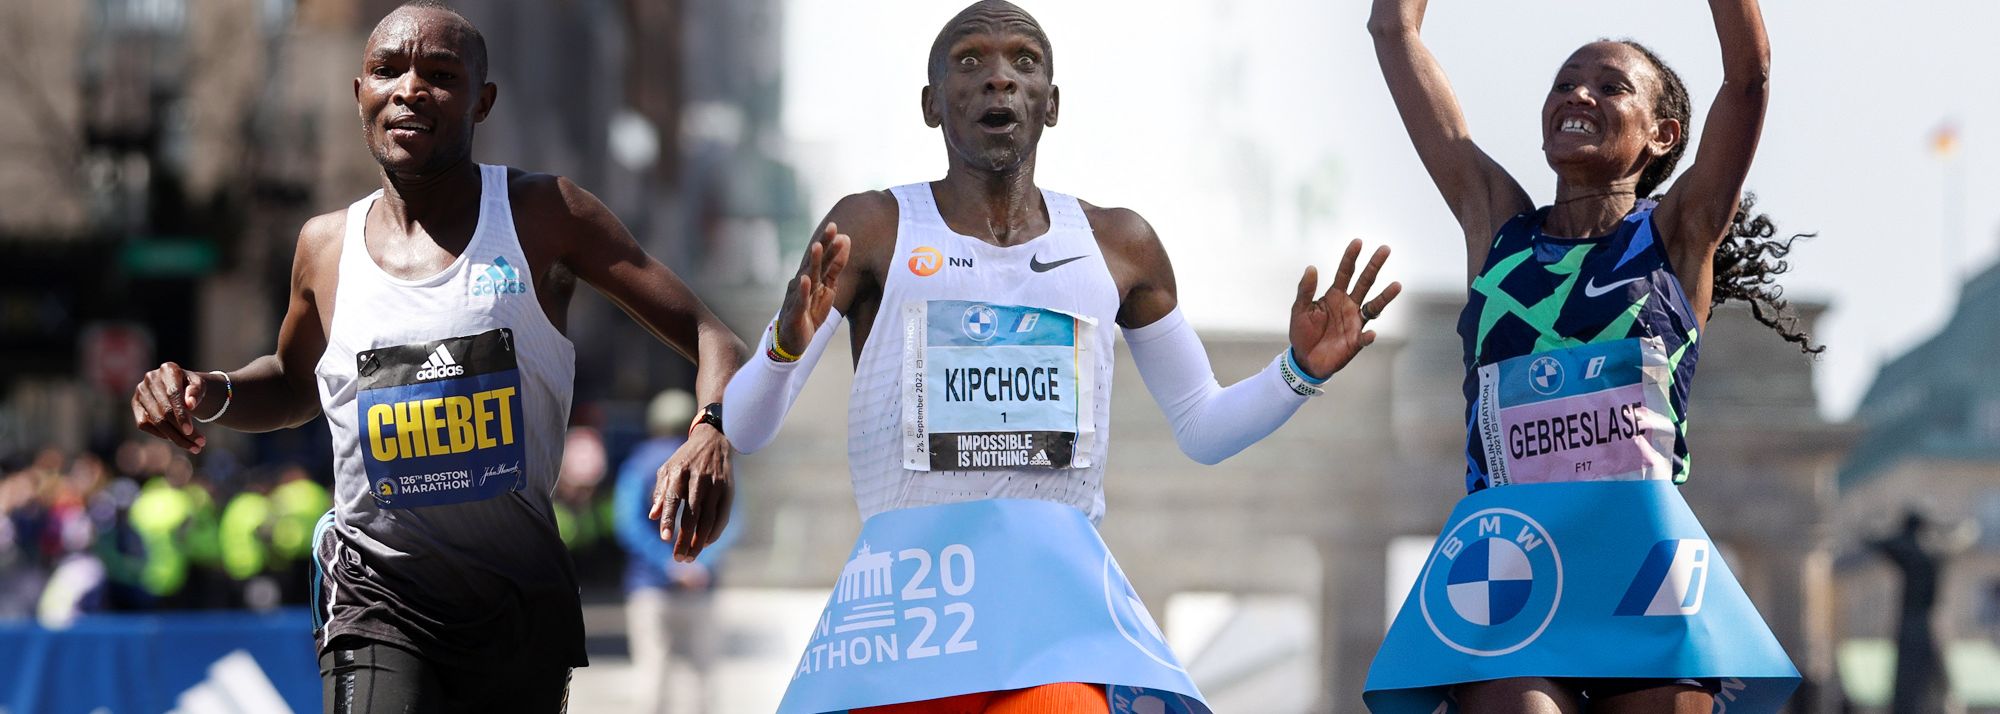 World record-holder and double Olympic champion Eliud Kipchoge will make his Boston Marathon debut